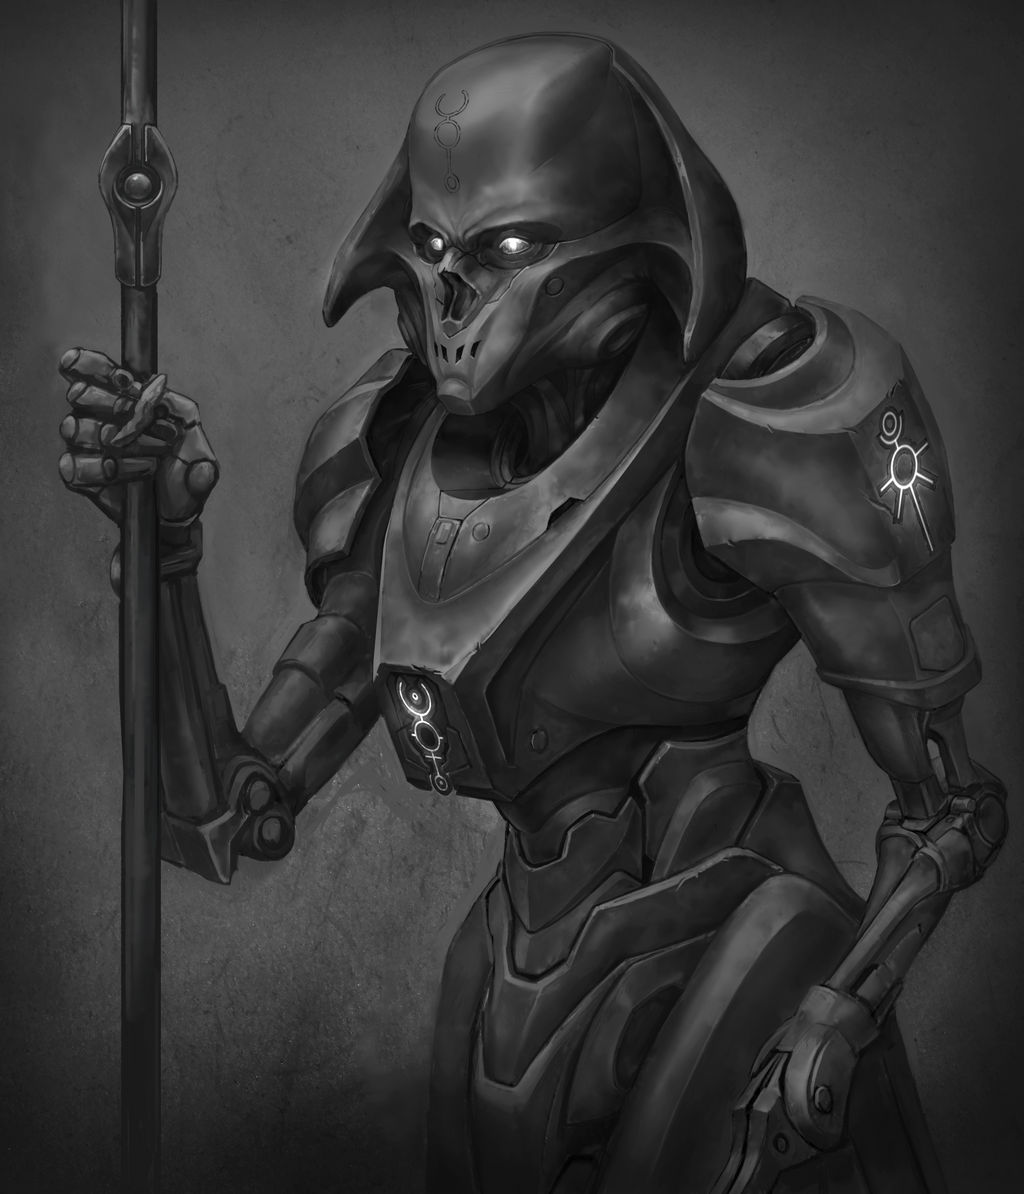 Necron warrior from the Nazarah dynasty